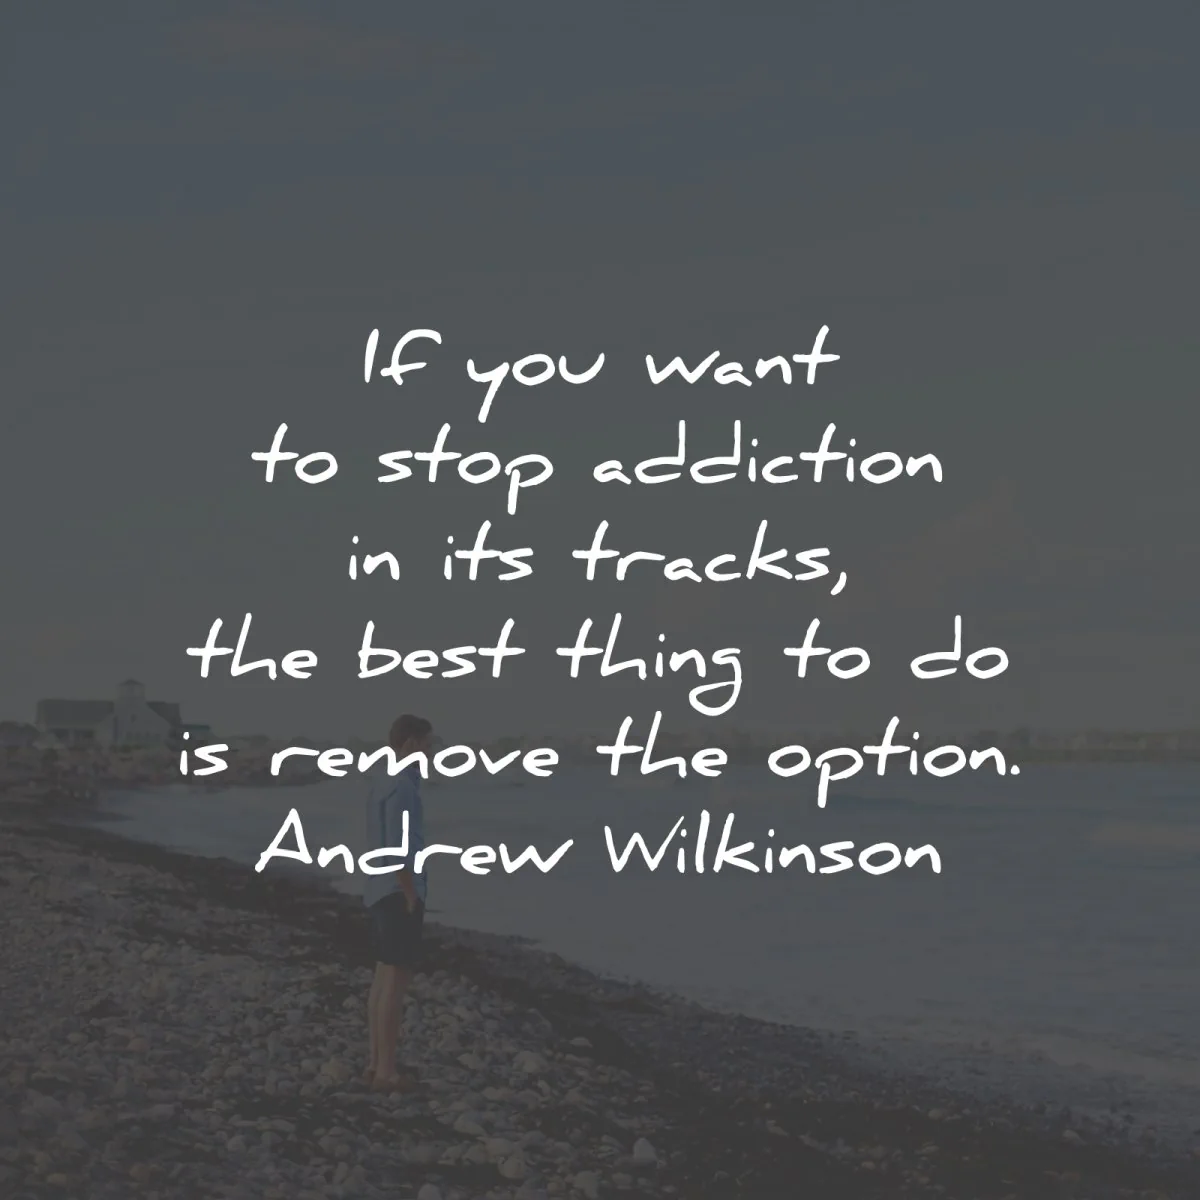 addiction social media quotes want stop tracks remove option andrew wilkinson wisdom